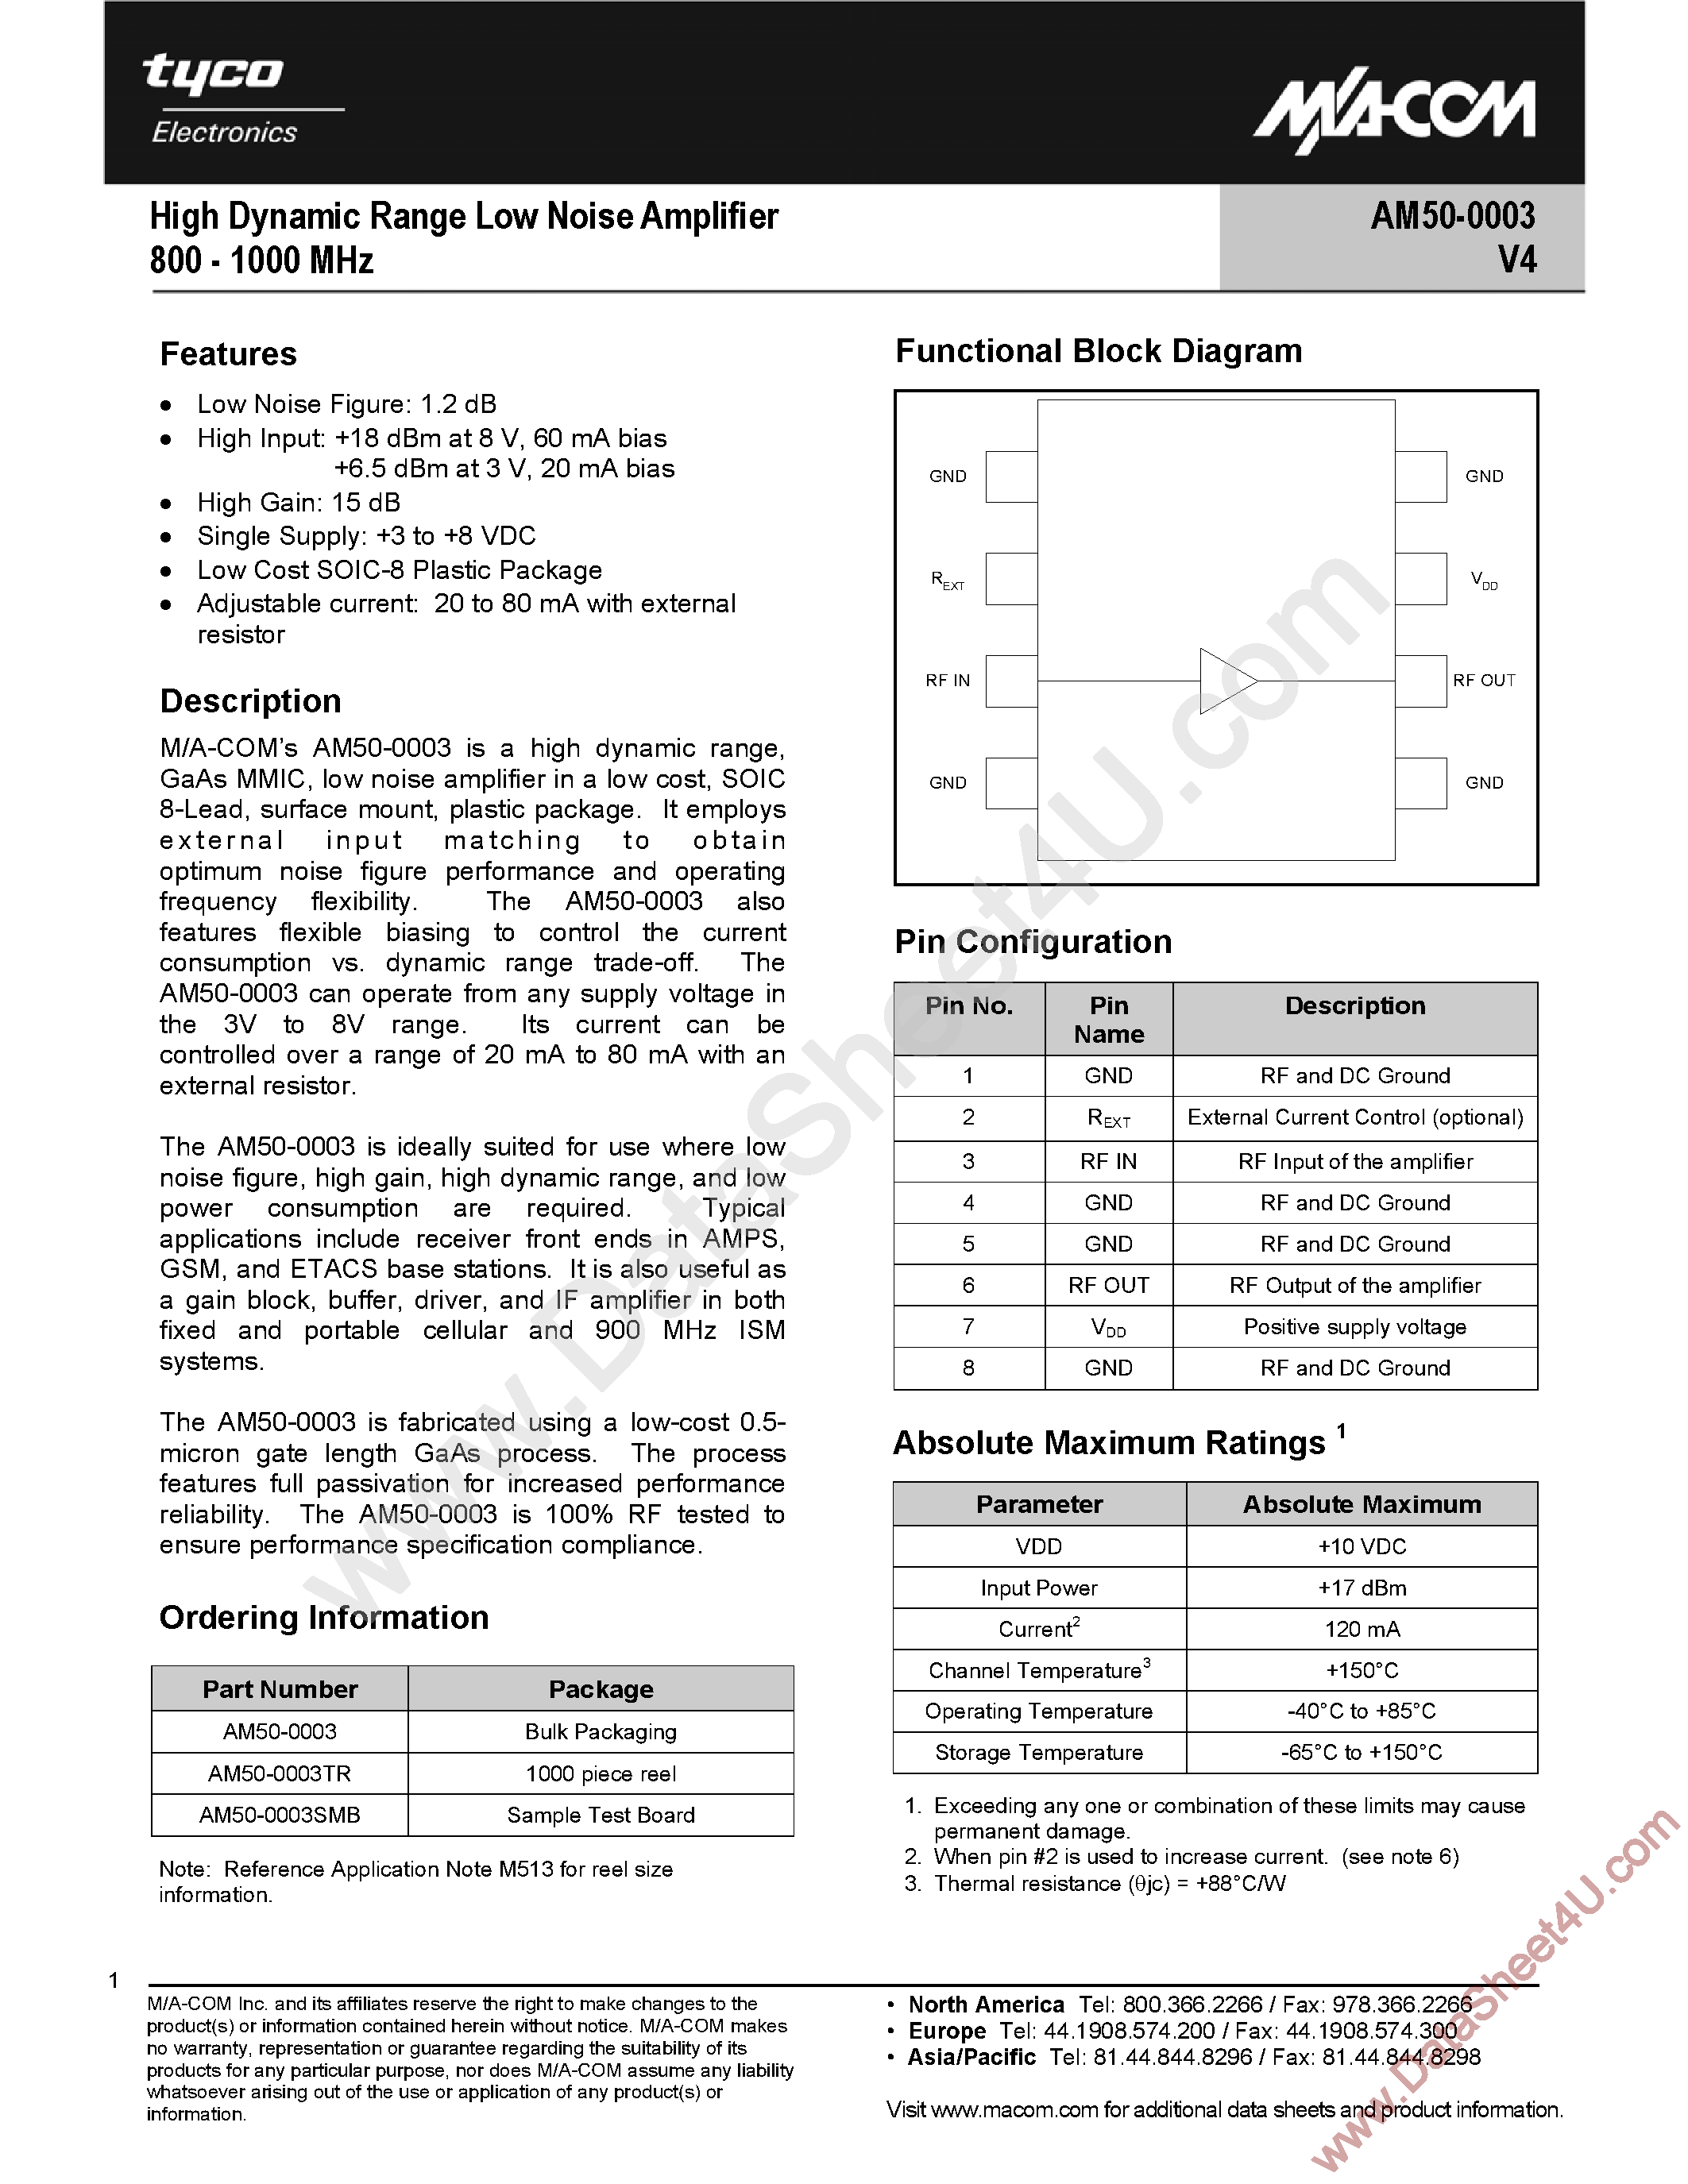 Даташит AM50-0003V4 - High Dynamic Range Low Noise Amplifier страница 1